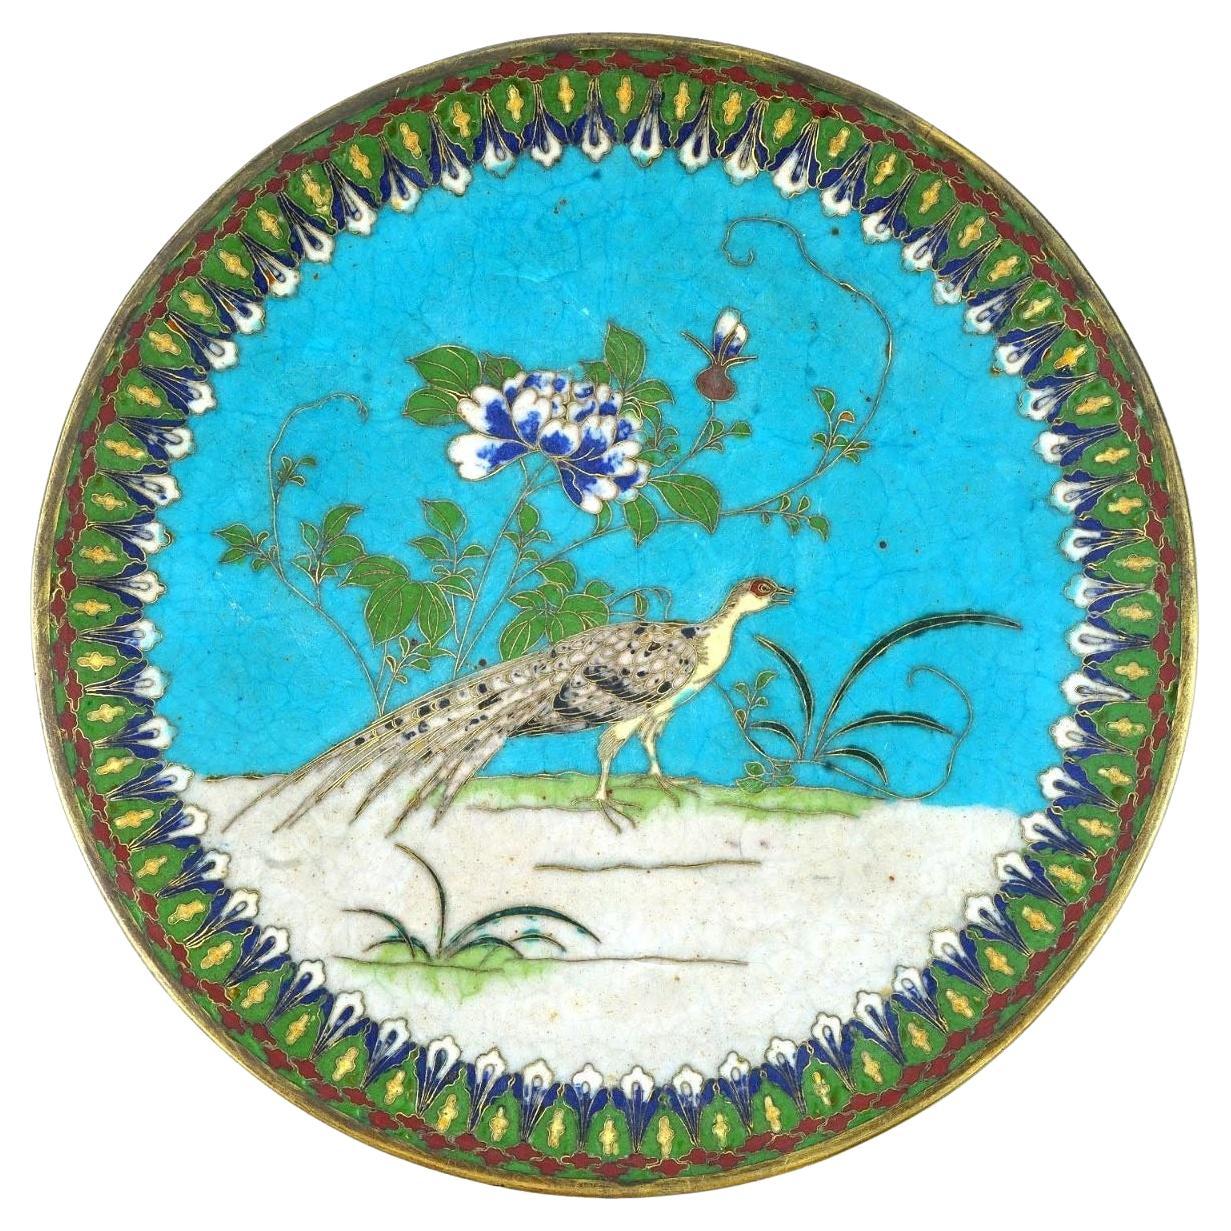 19th Century Cloisonne Enamel Plate Depicting Peacock For Sale